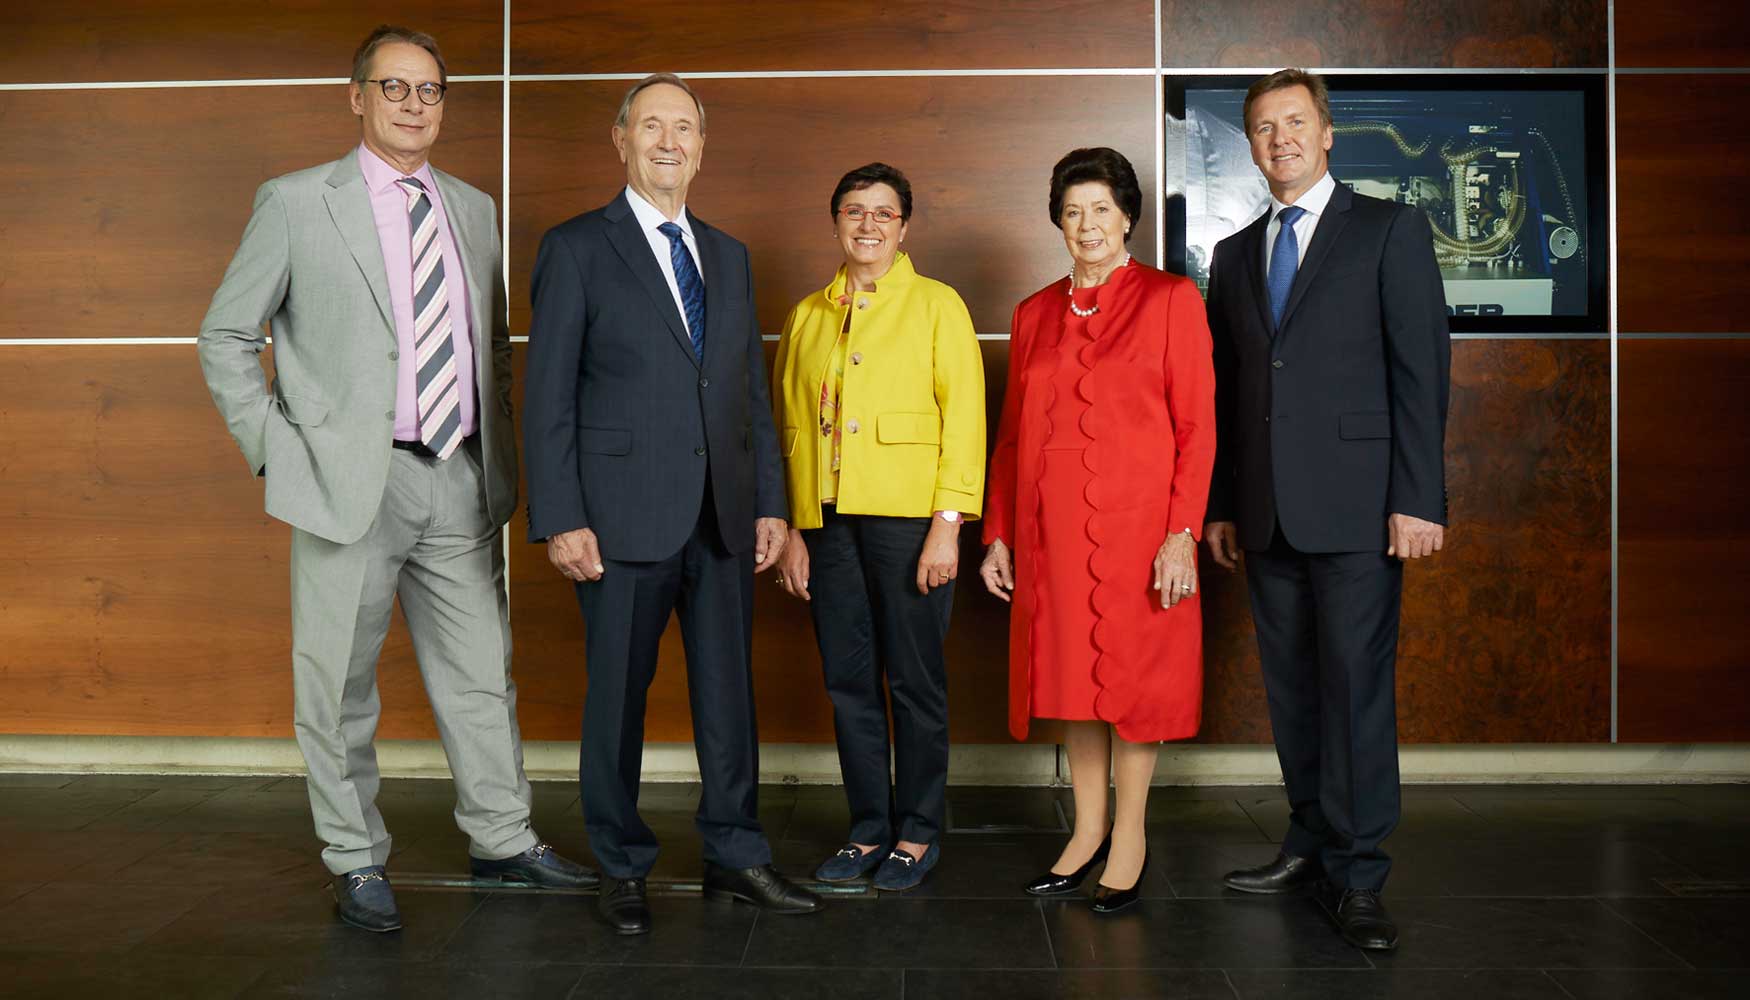 Equipo directivo de Felder Group: Hansjrg, Johann, Elisabeth, Gertraud y Martin Felder